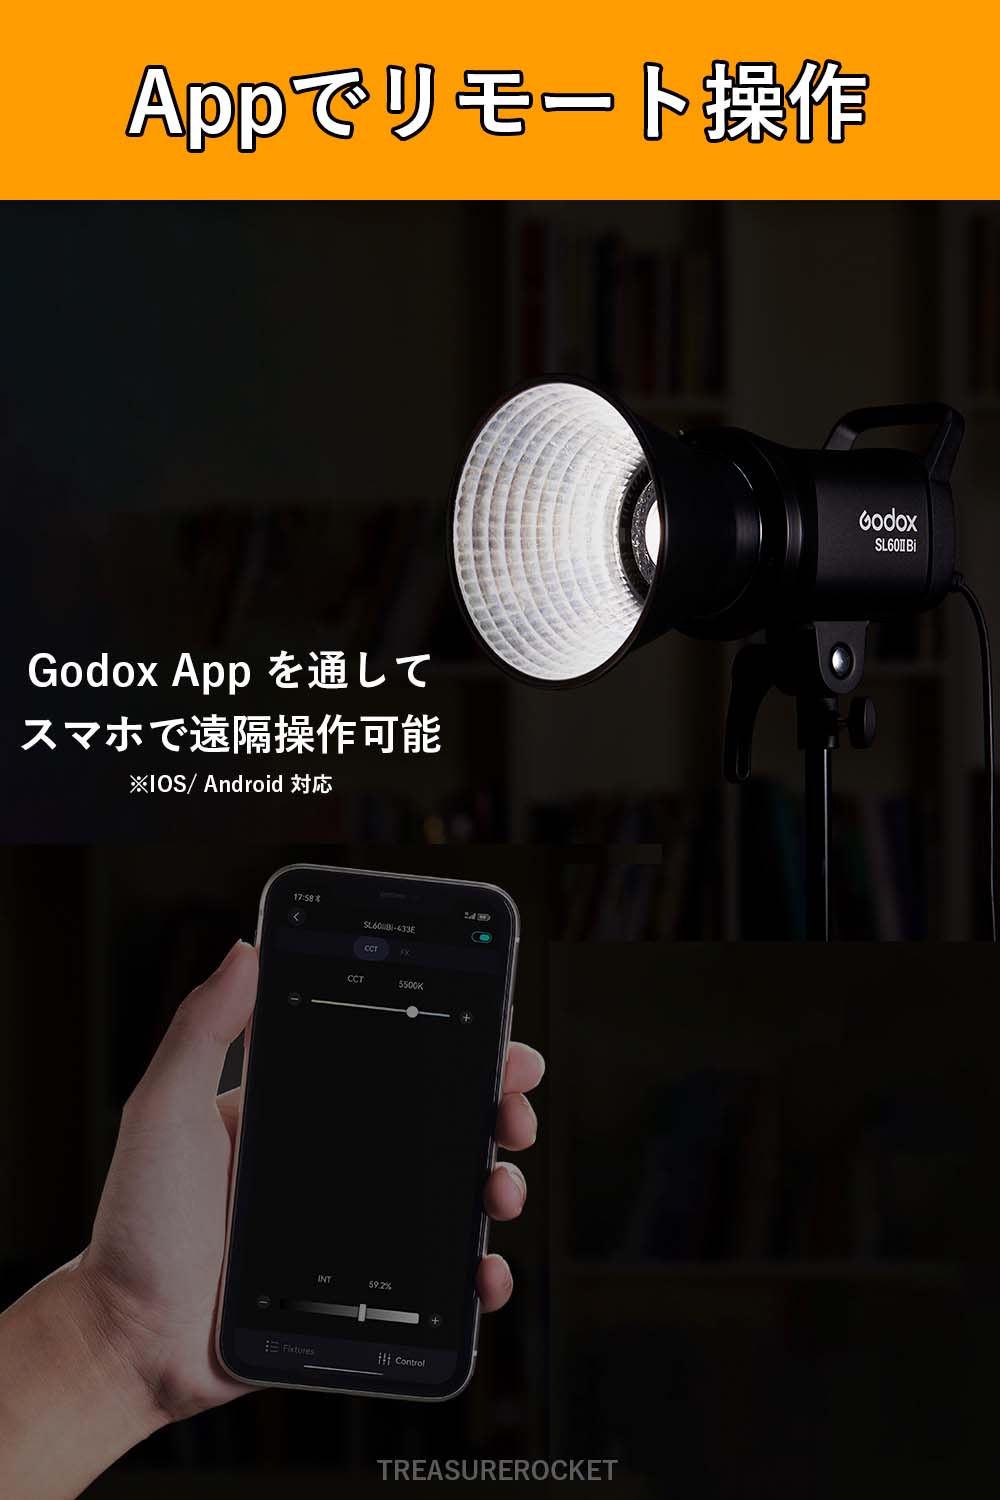 Godox SL-60iiD SL60iiD 70W 定常光LEDライト ビデオライト Bowensマウント 5600±200K